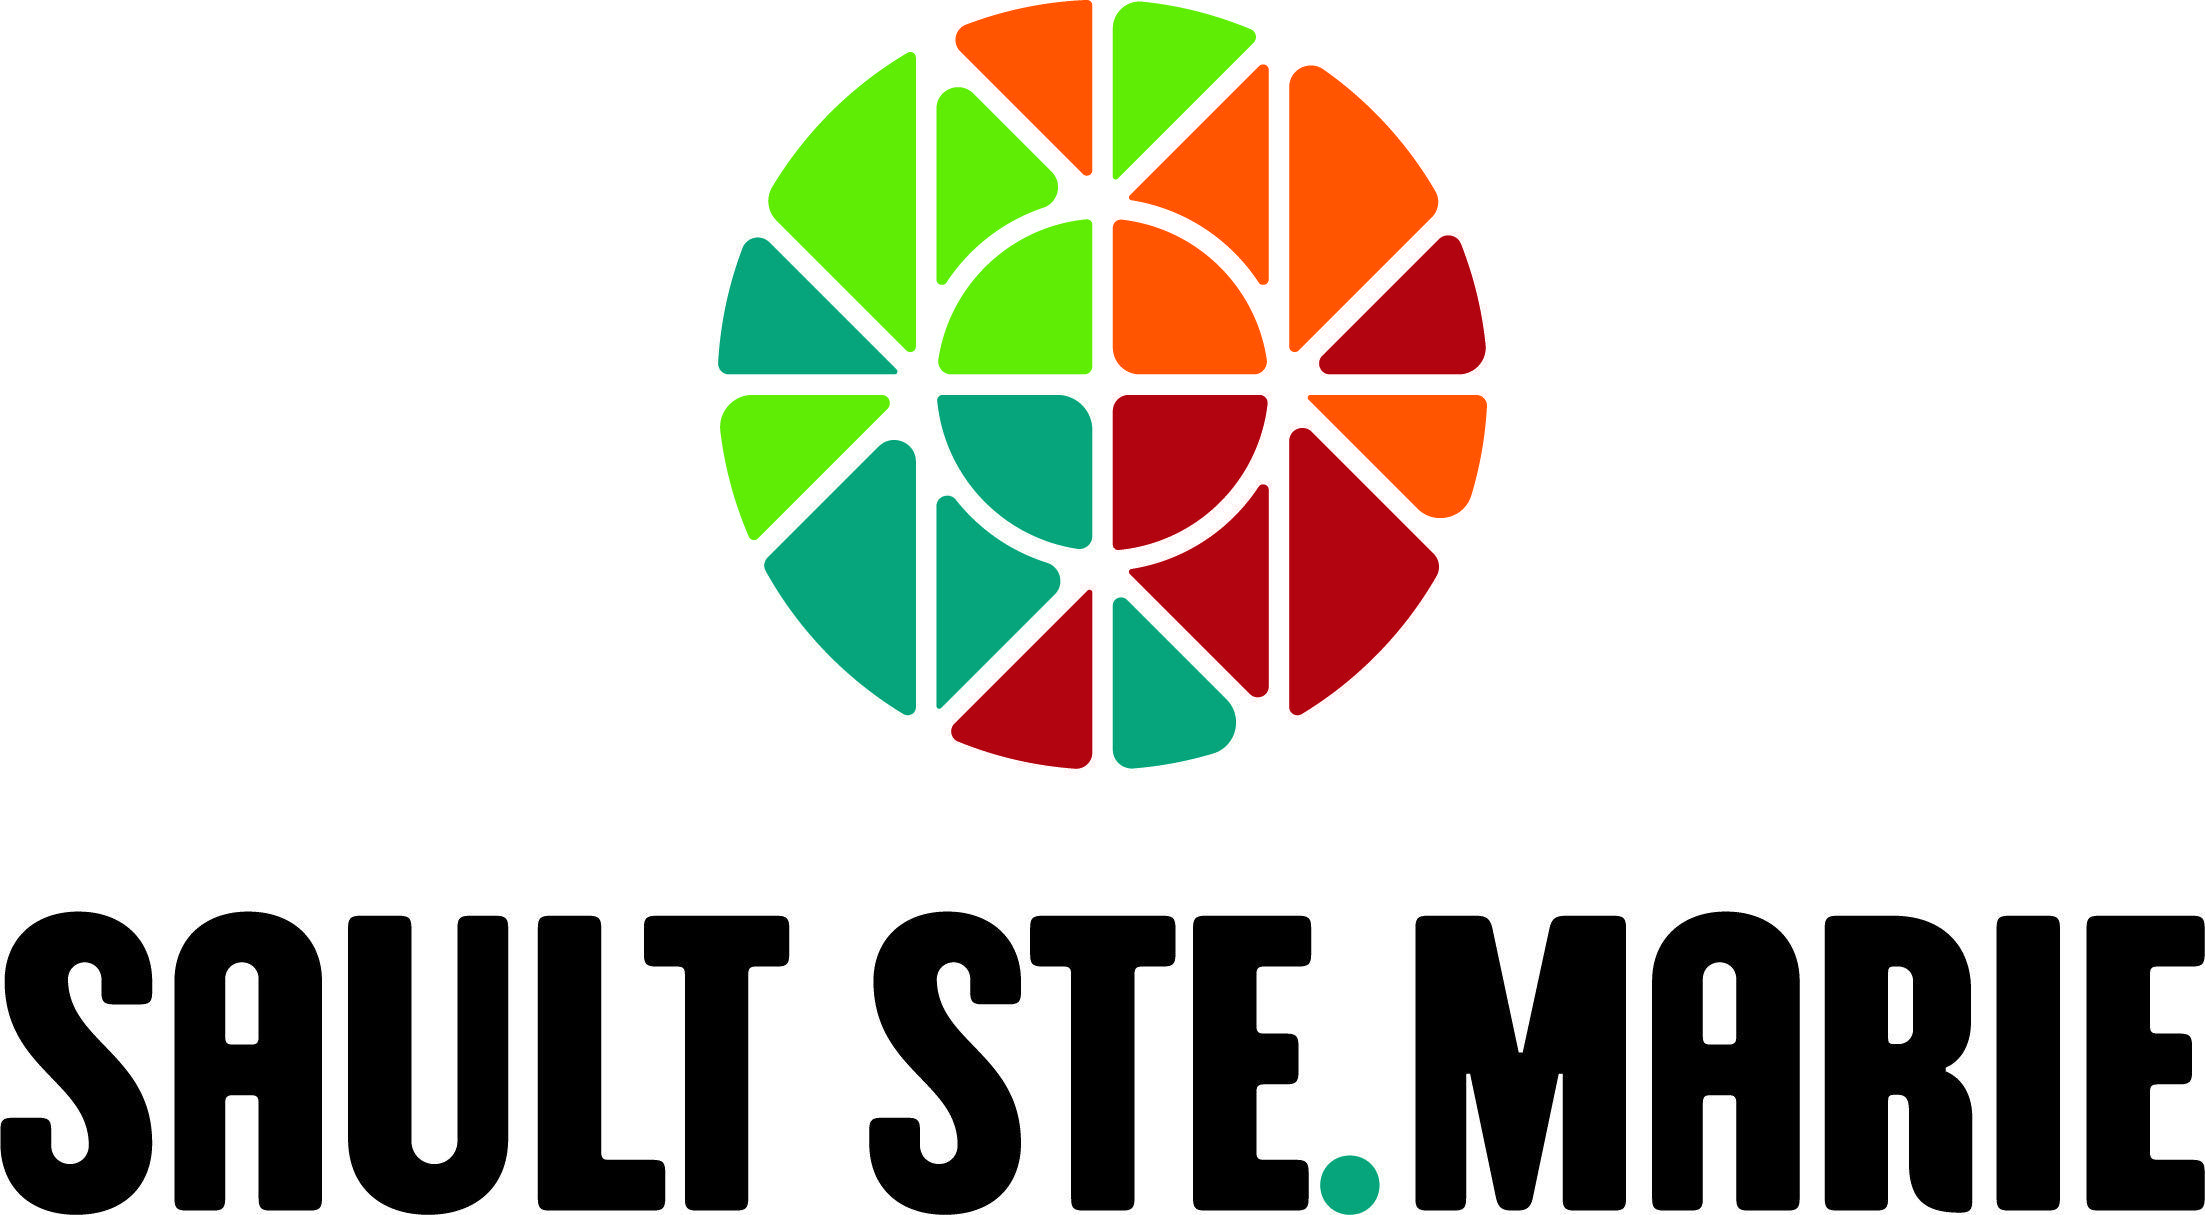 Ste Logo - City unveils new logo, branding strategy